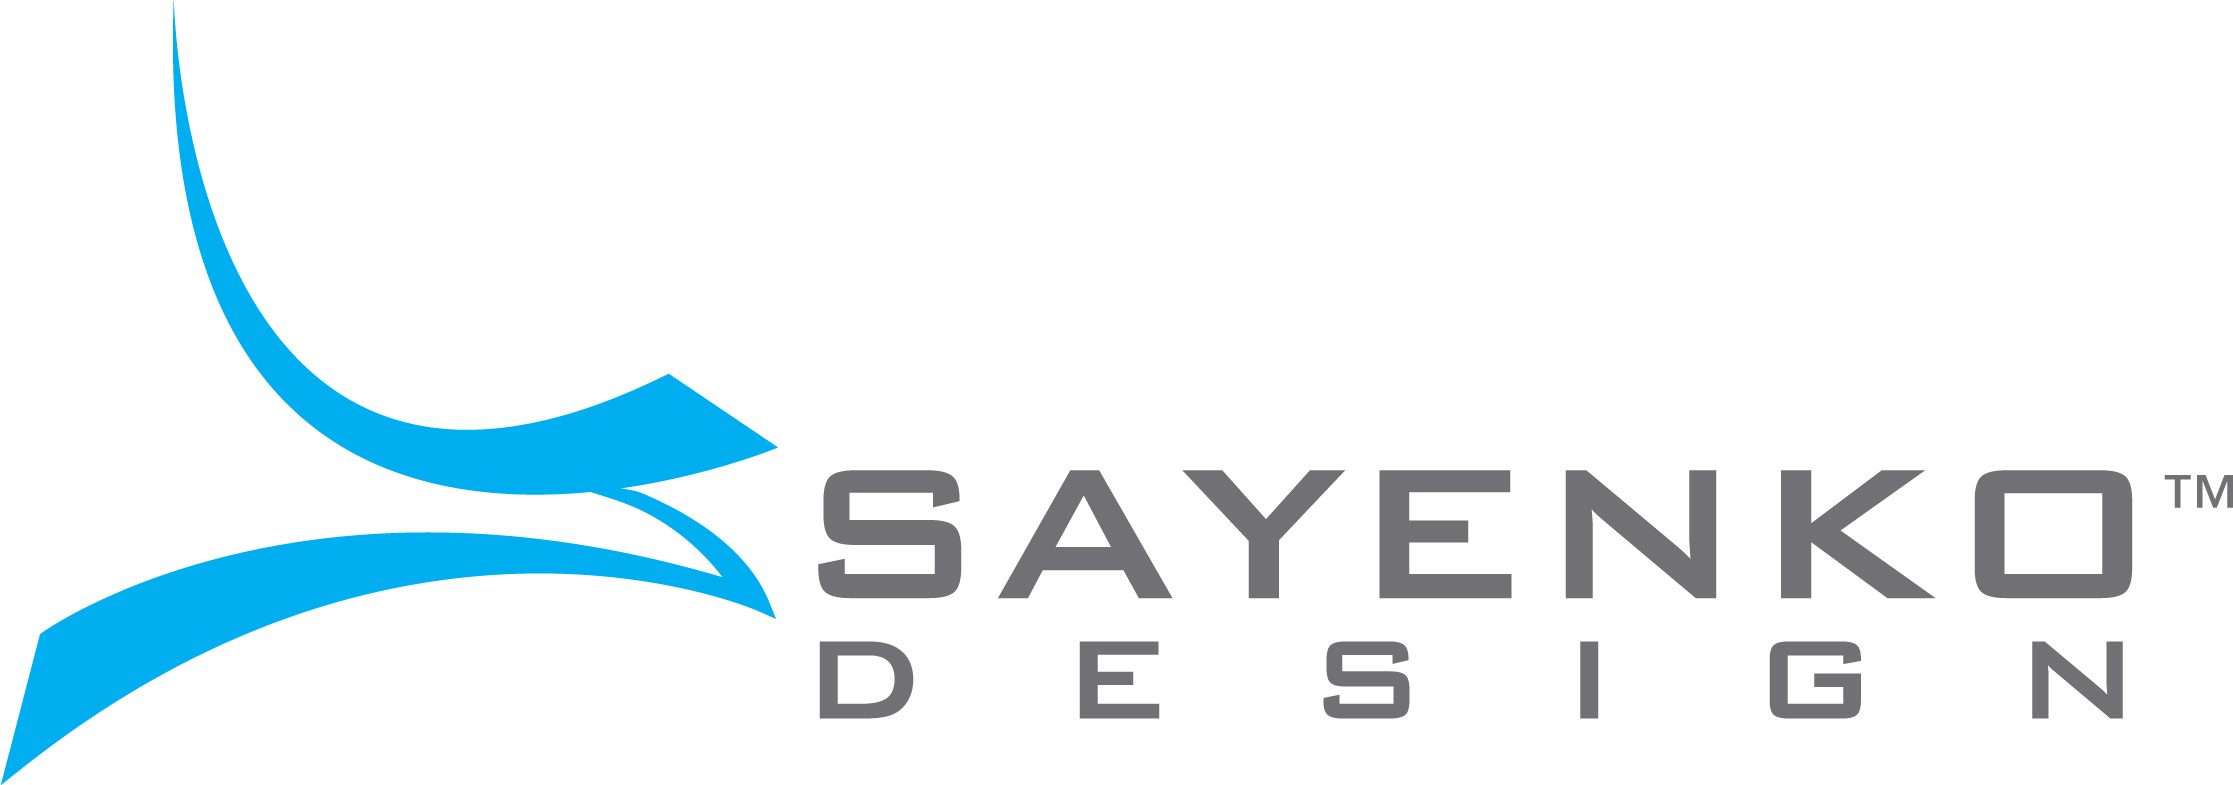 Best Seattle Web Design Firm Logo: Sayenko Design